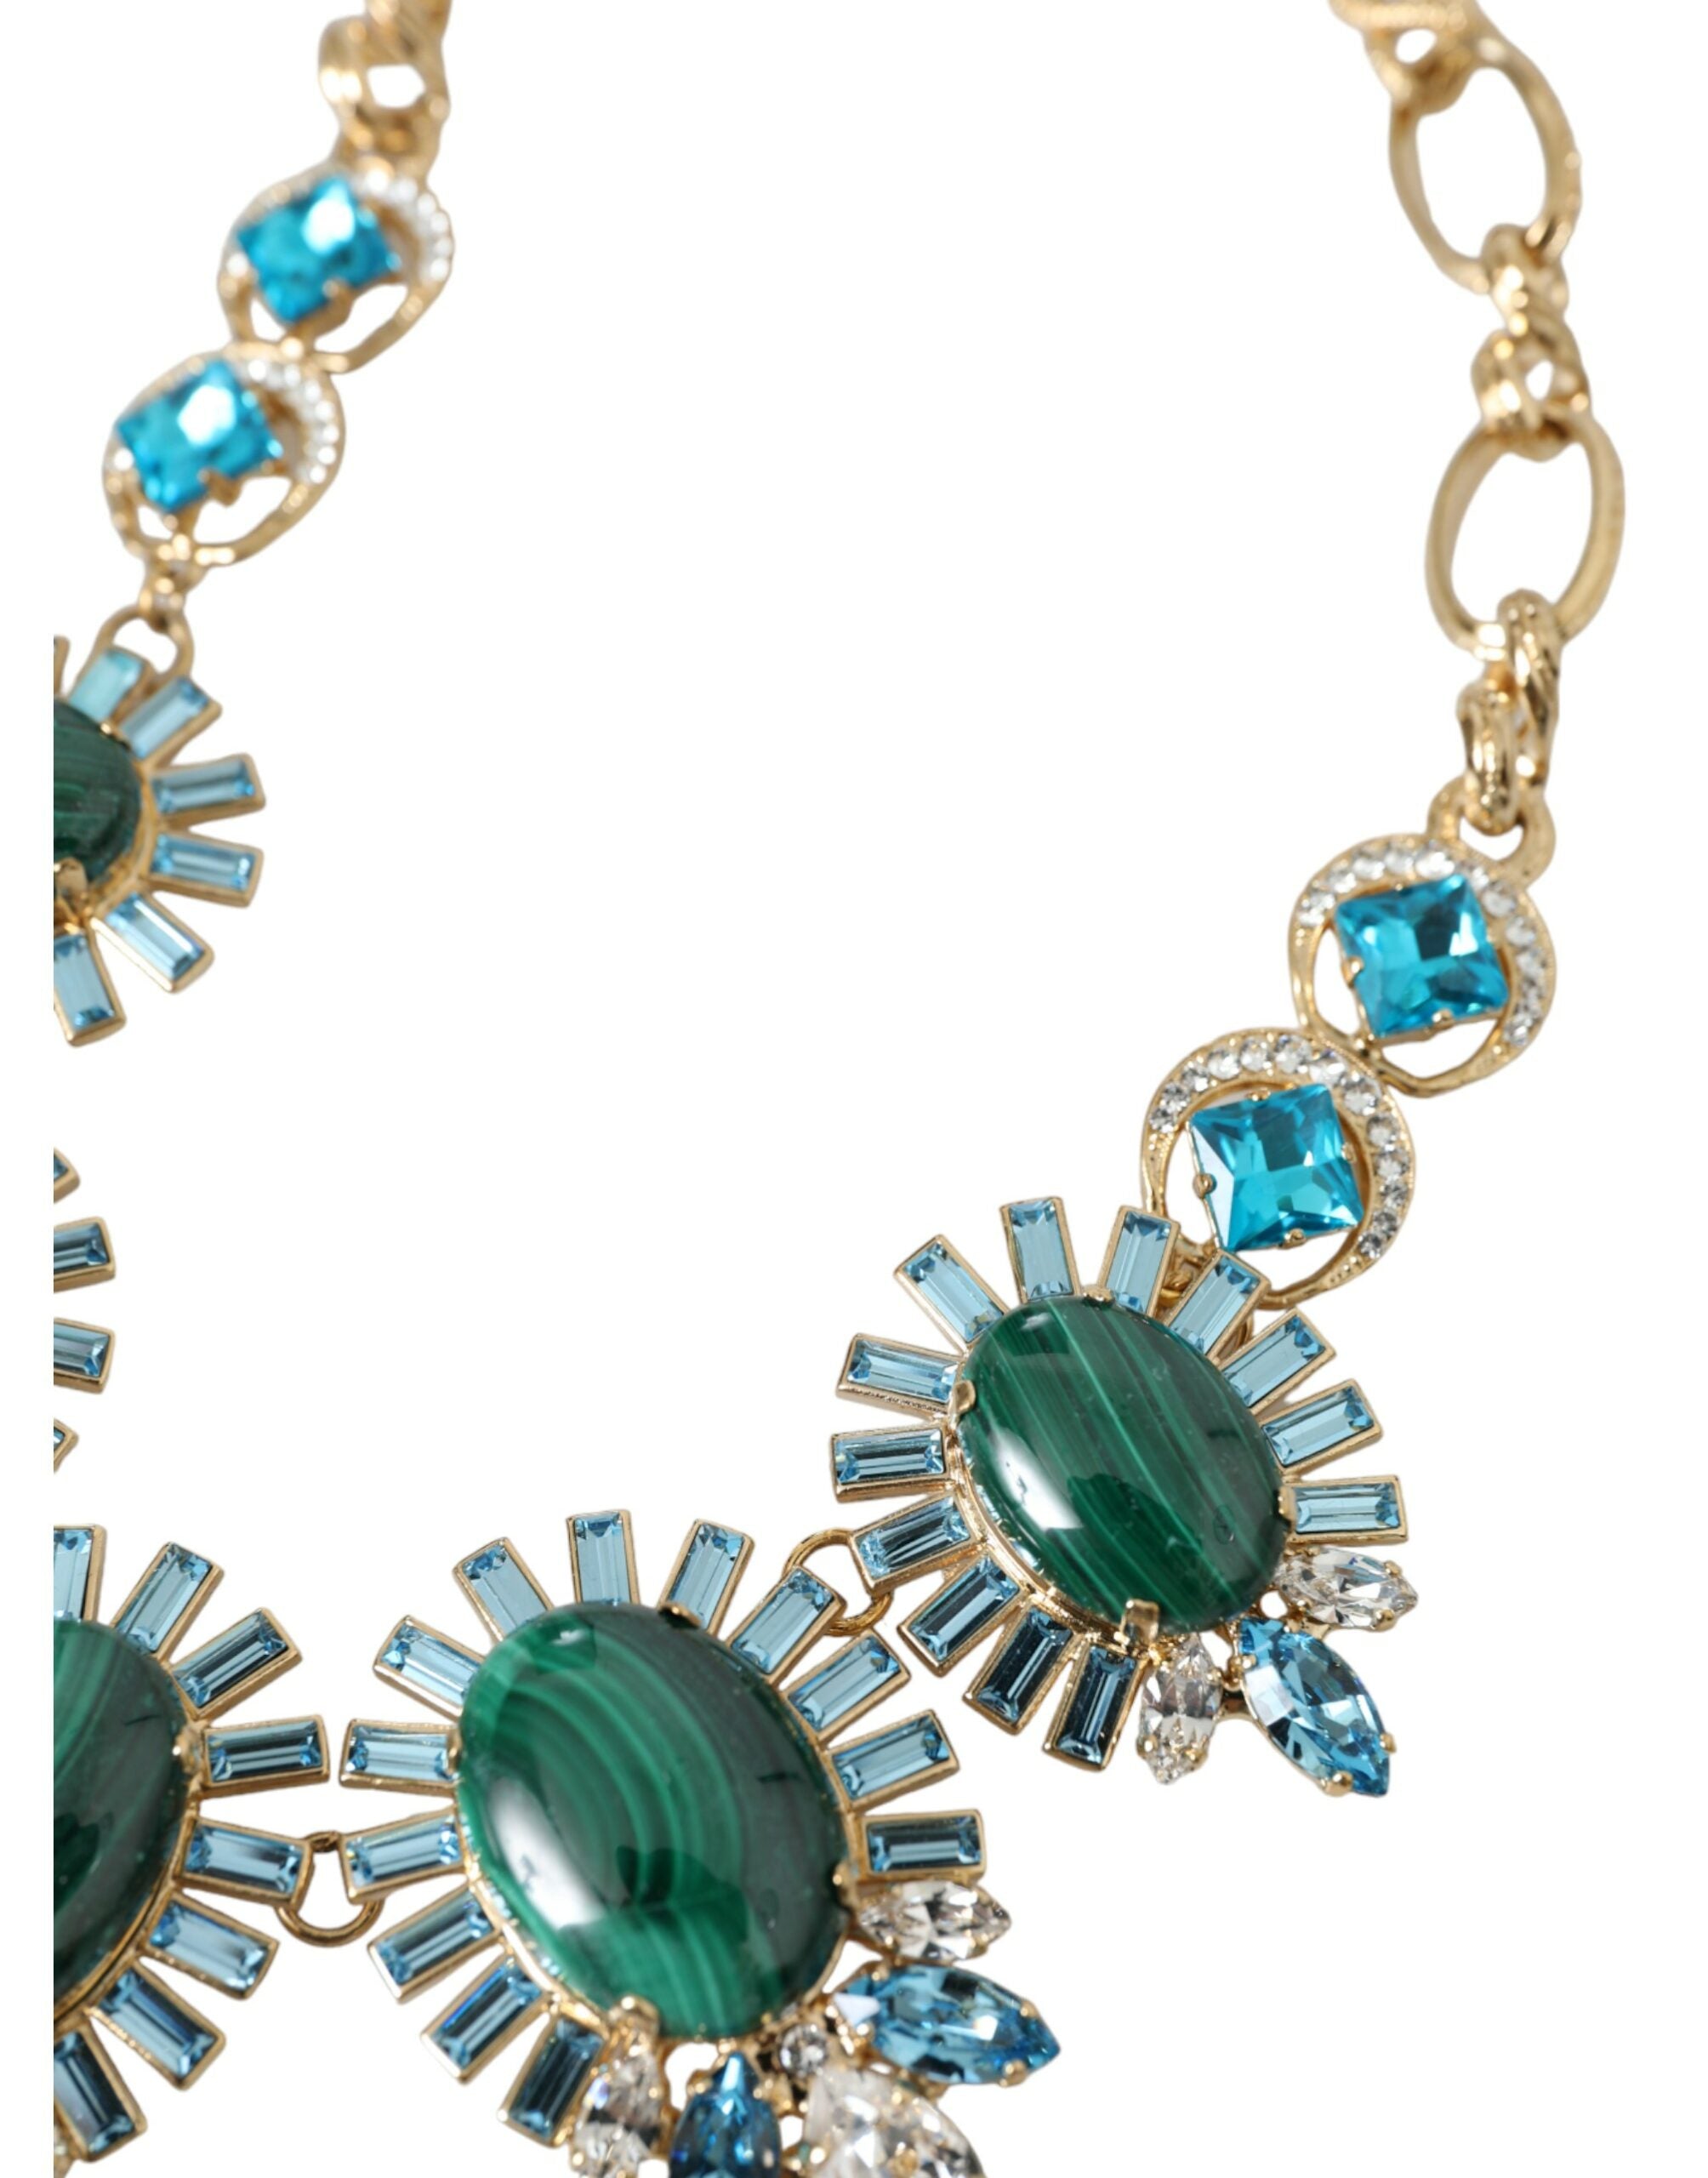 Gold ToneBrass PIETRE OVALI Crystal Embellished Necklace - Divitiae Glamour